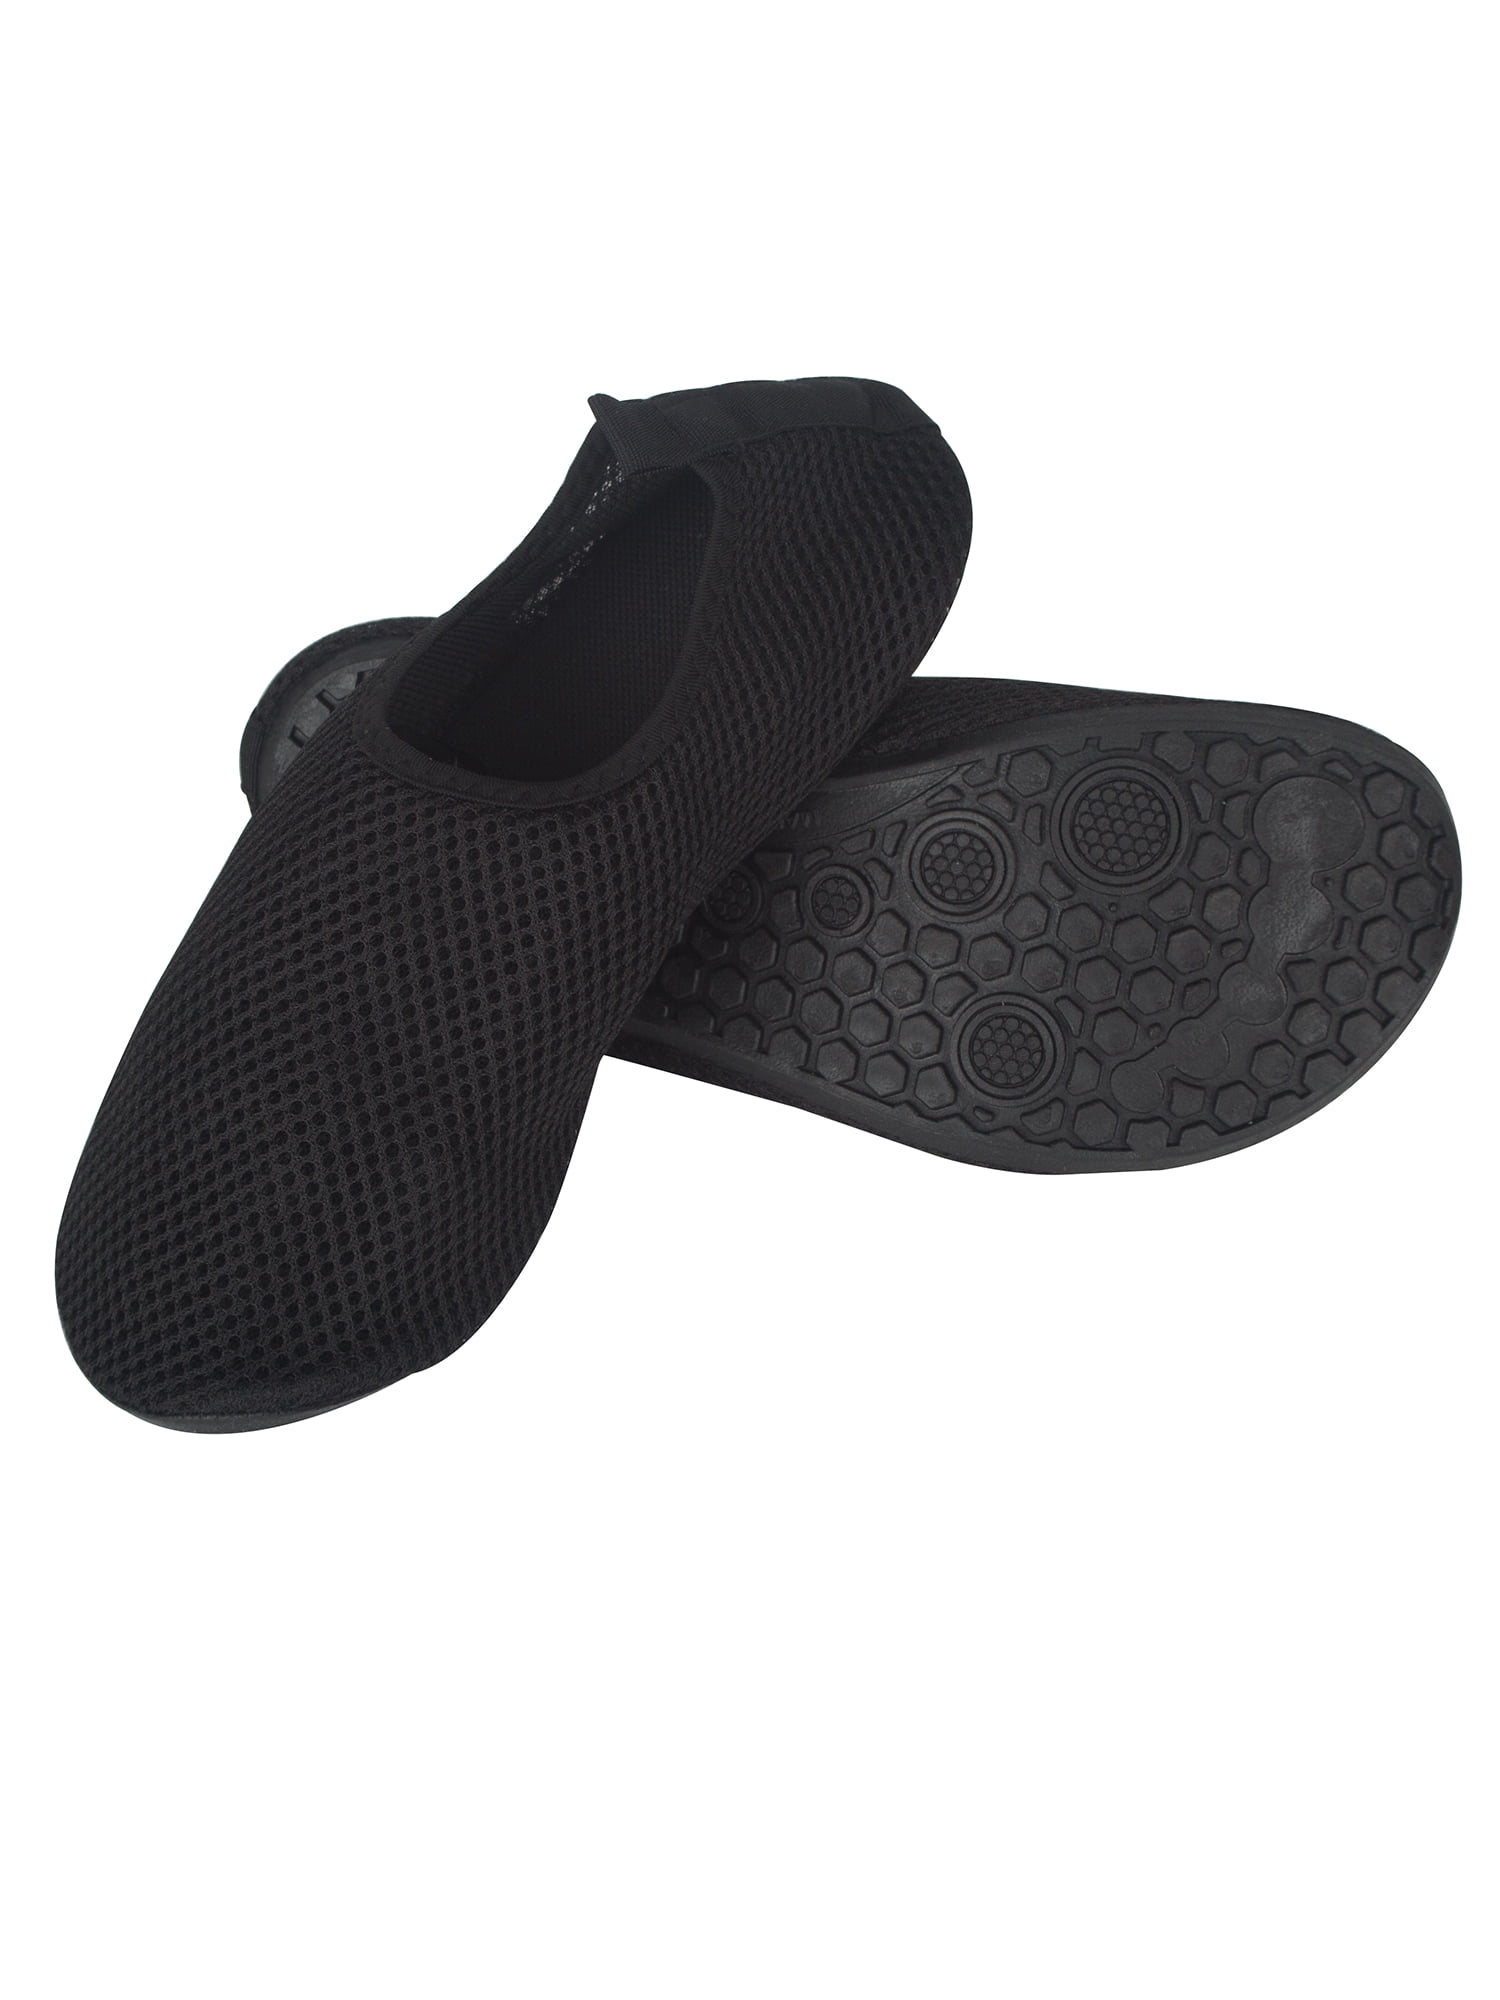 Details about   Skin Water Shoes Aqua Beach Socks Yoga Exercise Swim Unisex Barefoot Socks 